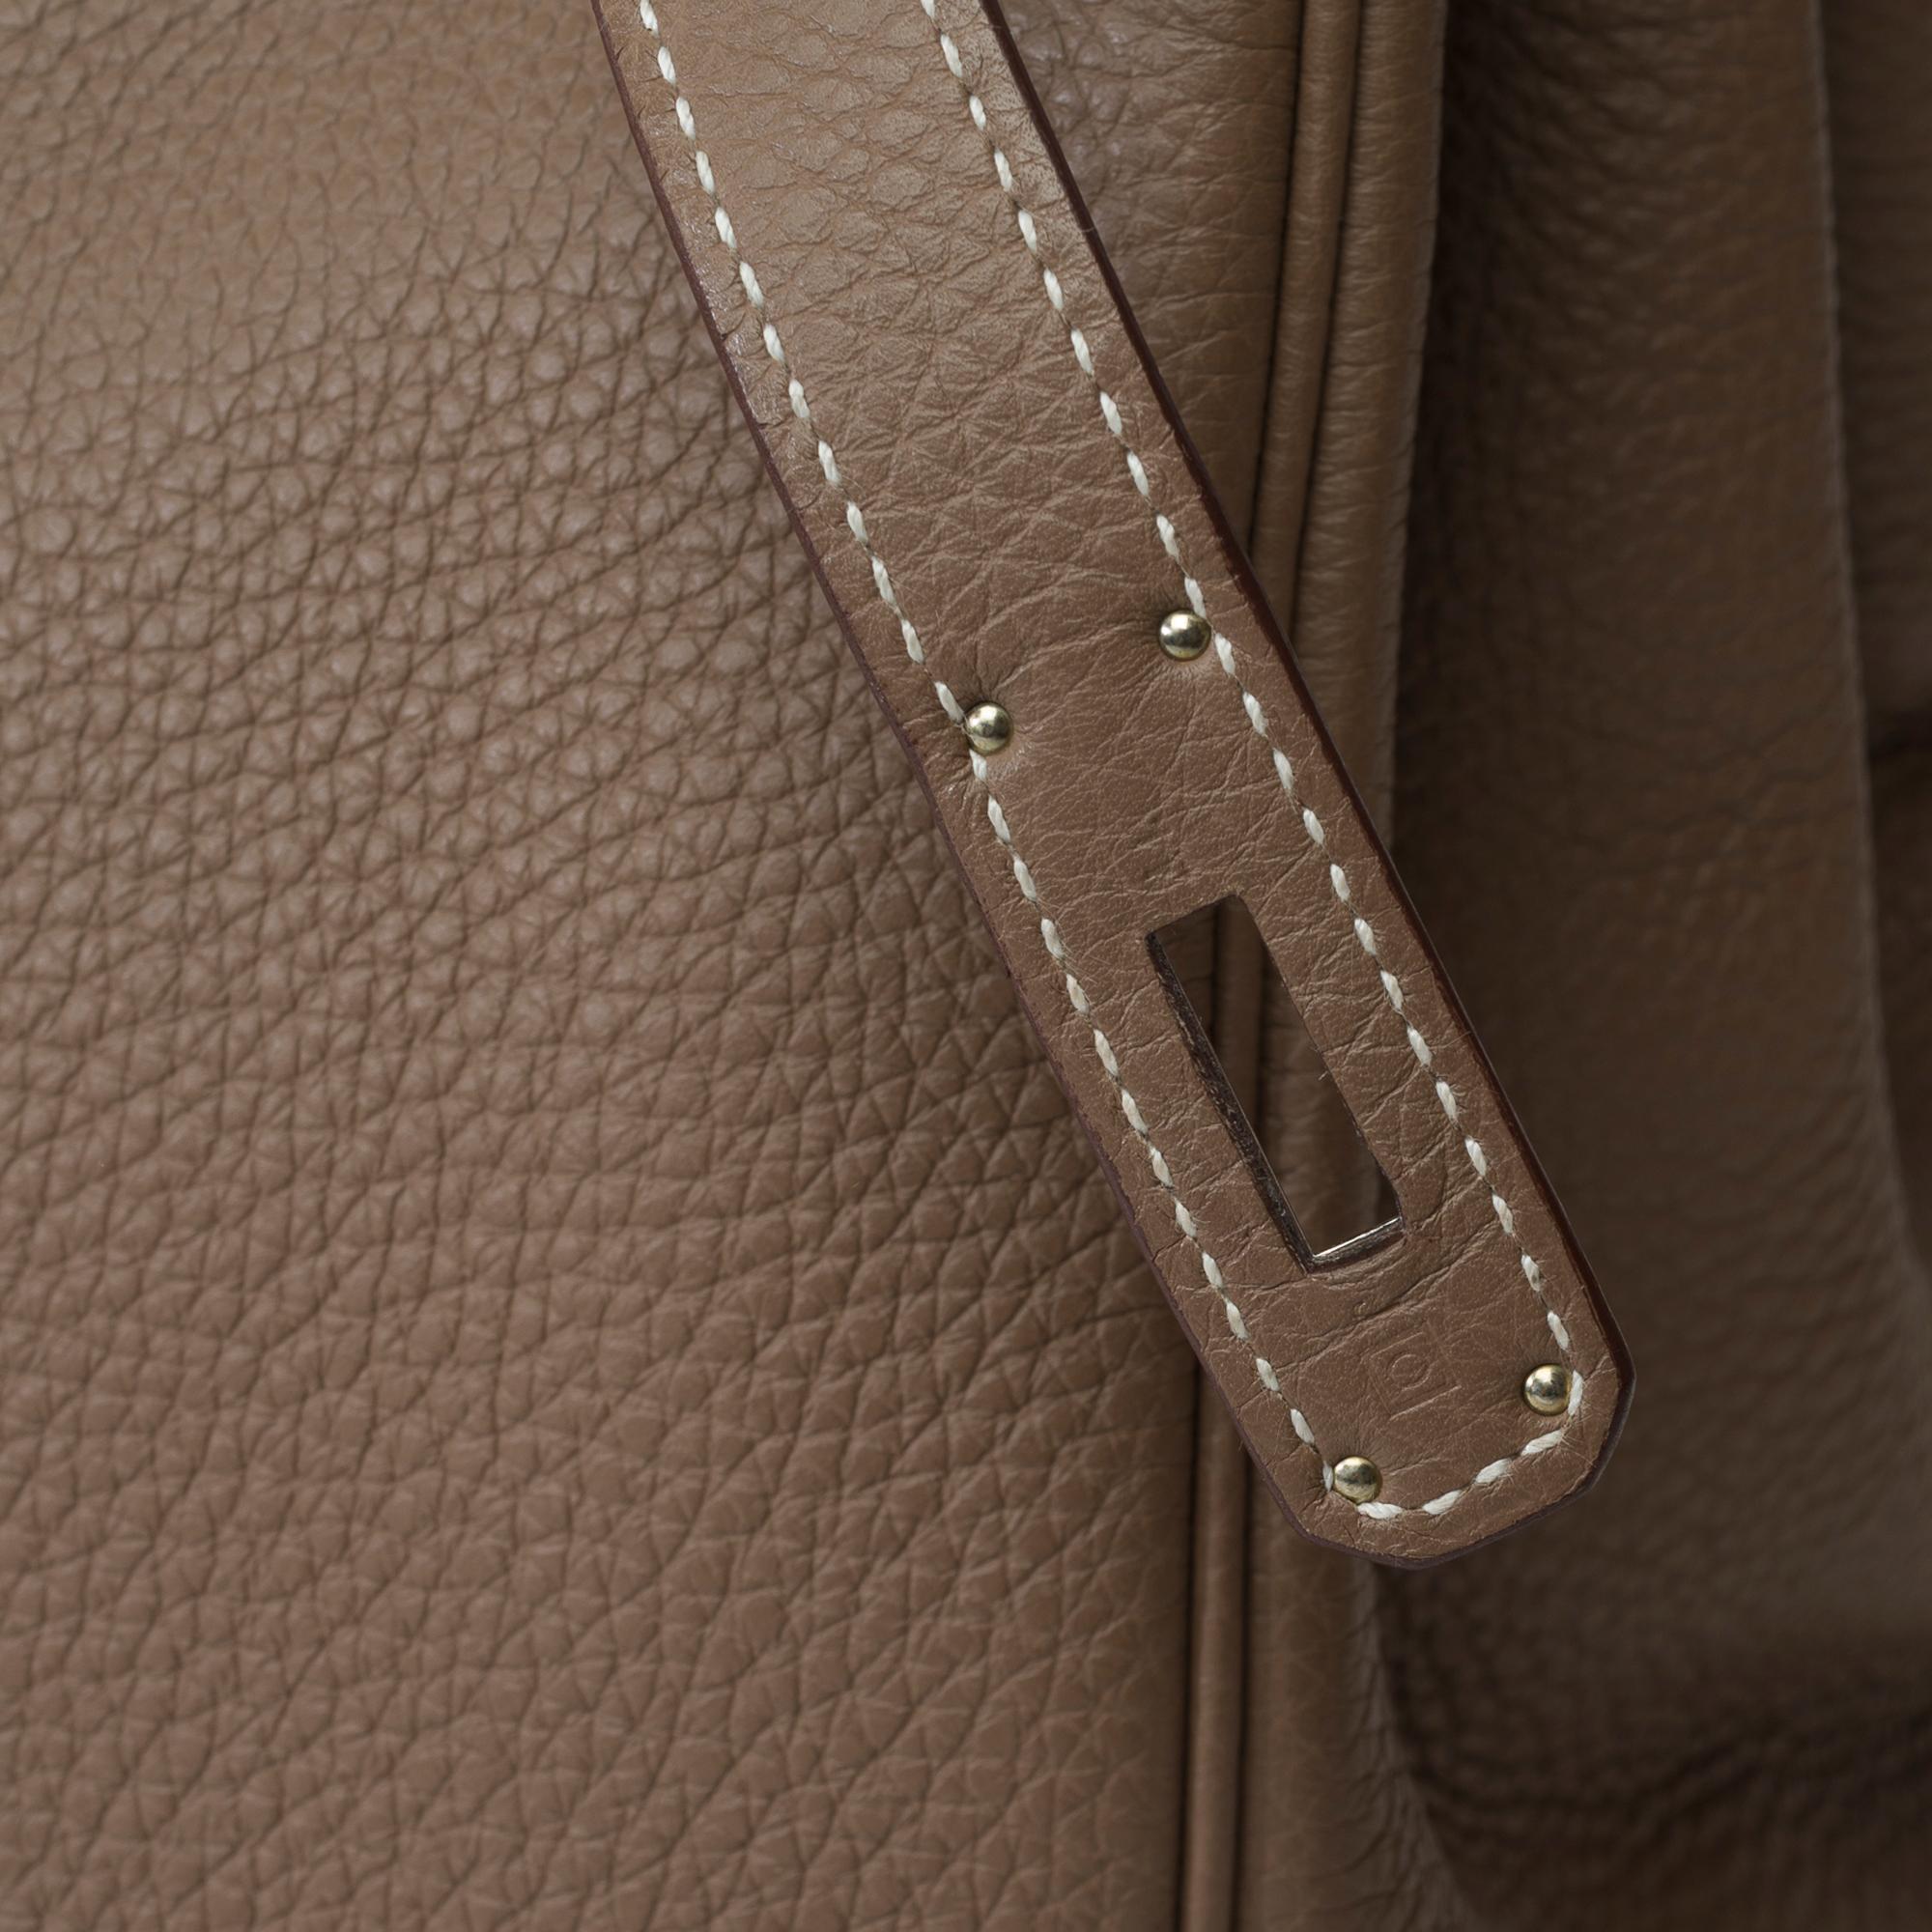 Stunning Hermès Birkin 35 handbag in etoupe Togo leather, SHW 5